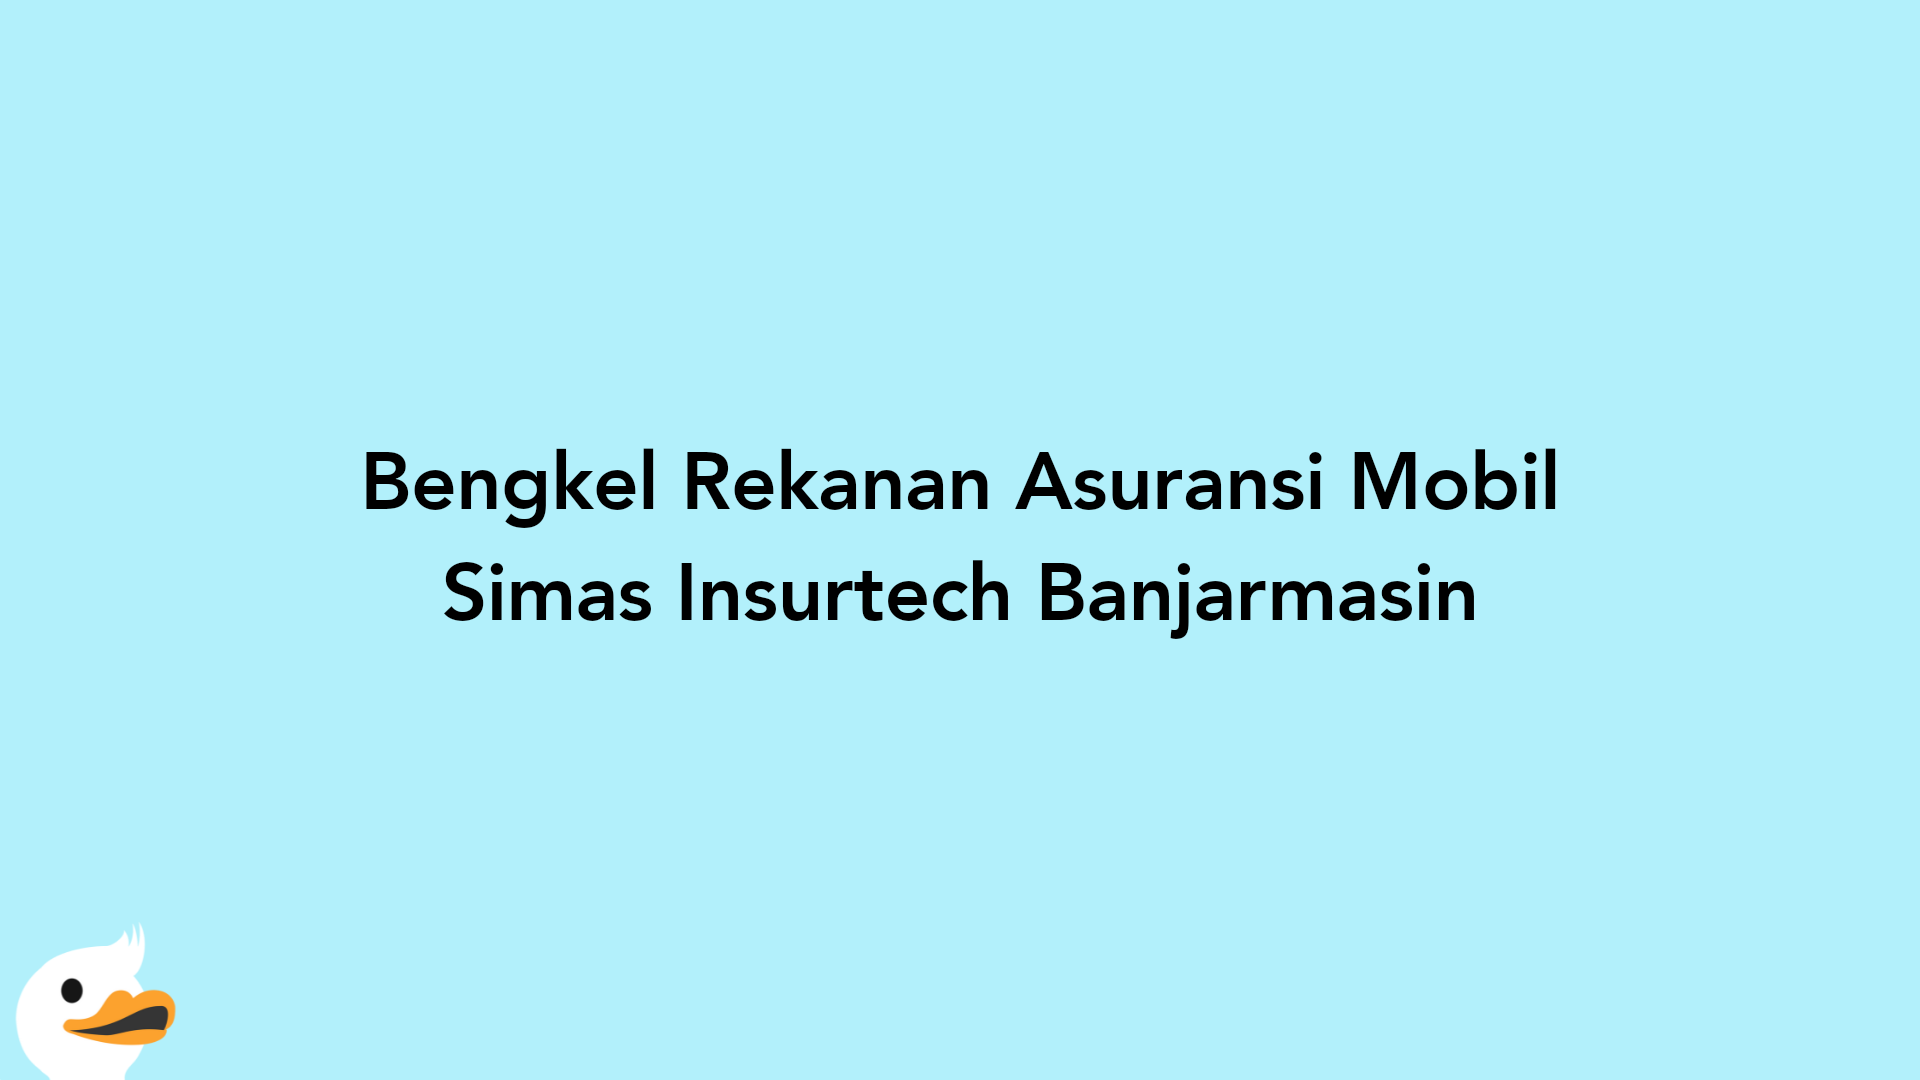 Bengkel Rekanan Asuransi Mobil Simas Insurtech Banjarmasin